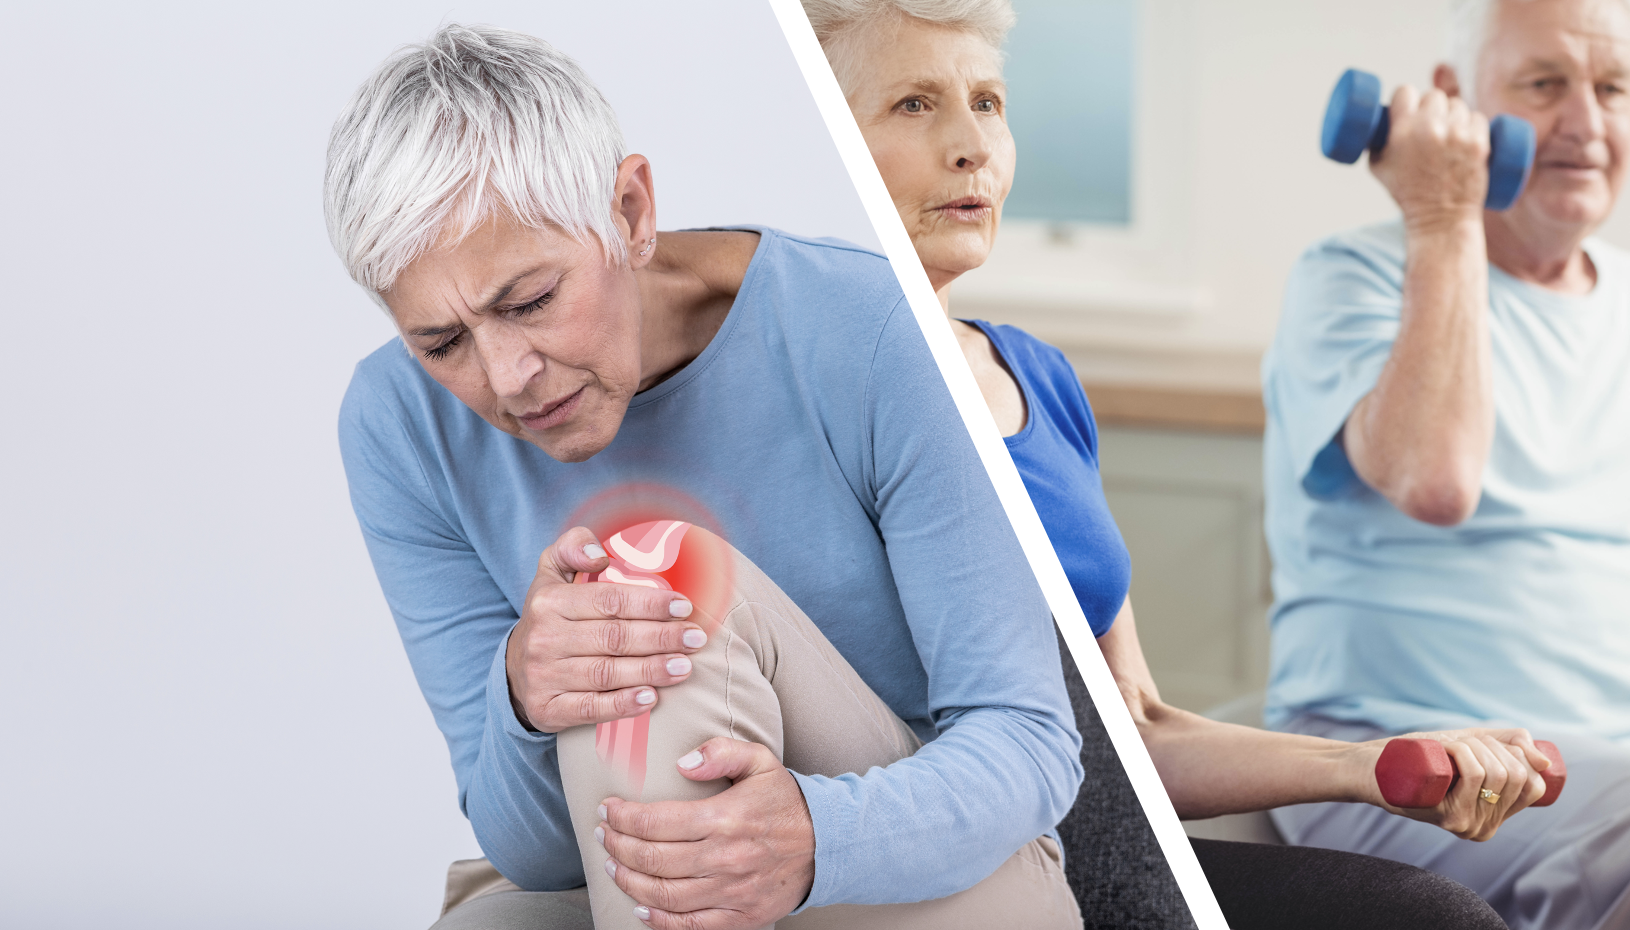 Combatting Sedentary Behavior in Patients With Knee Osteoarthritis or Replacement